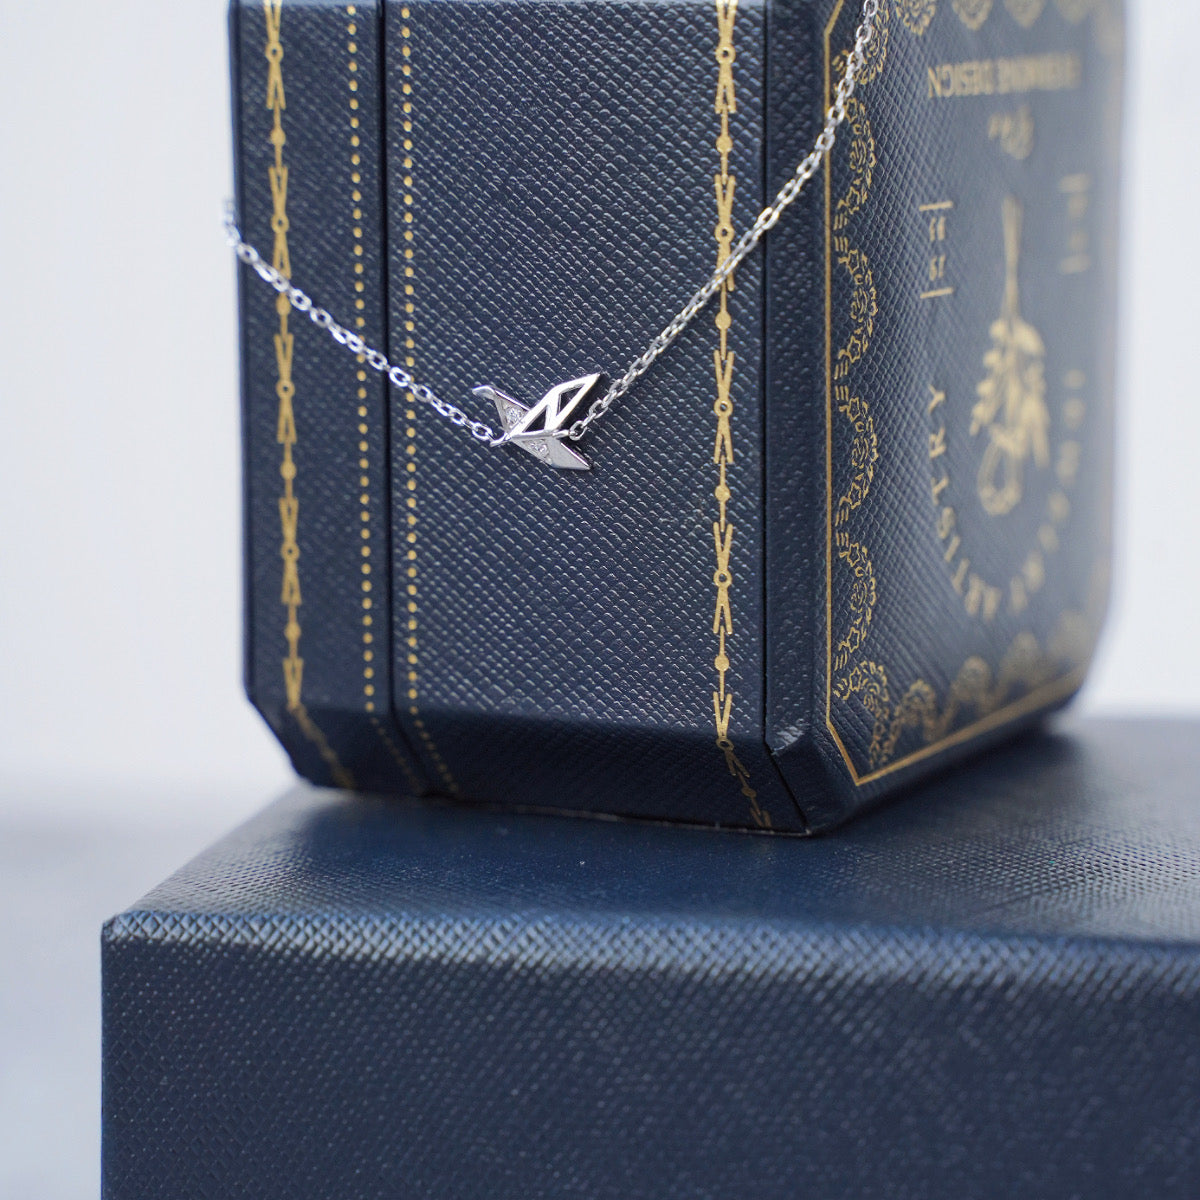 925 Silver Origami Crane Bracelet with Zirconia - Shimmering Design